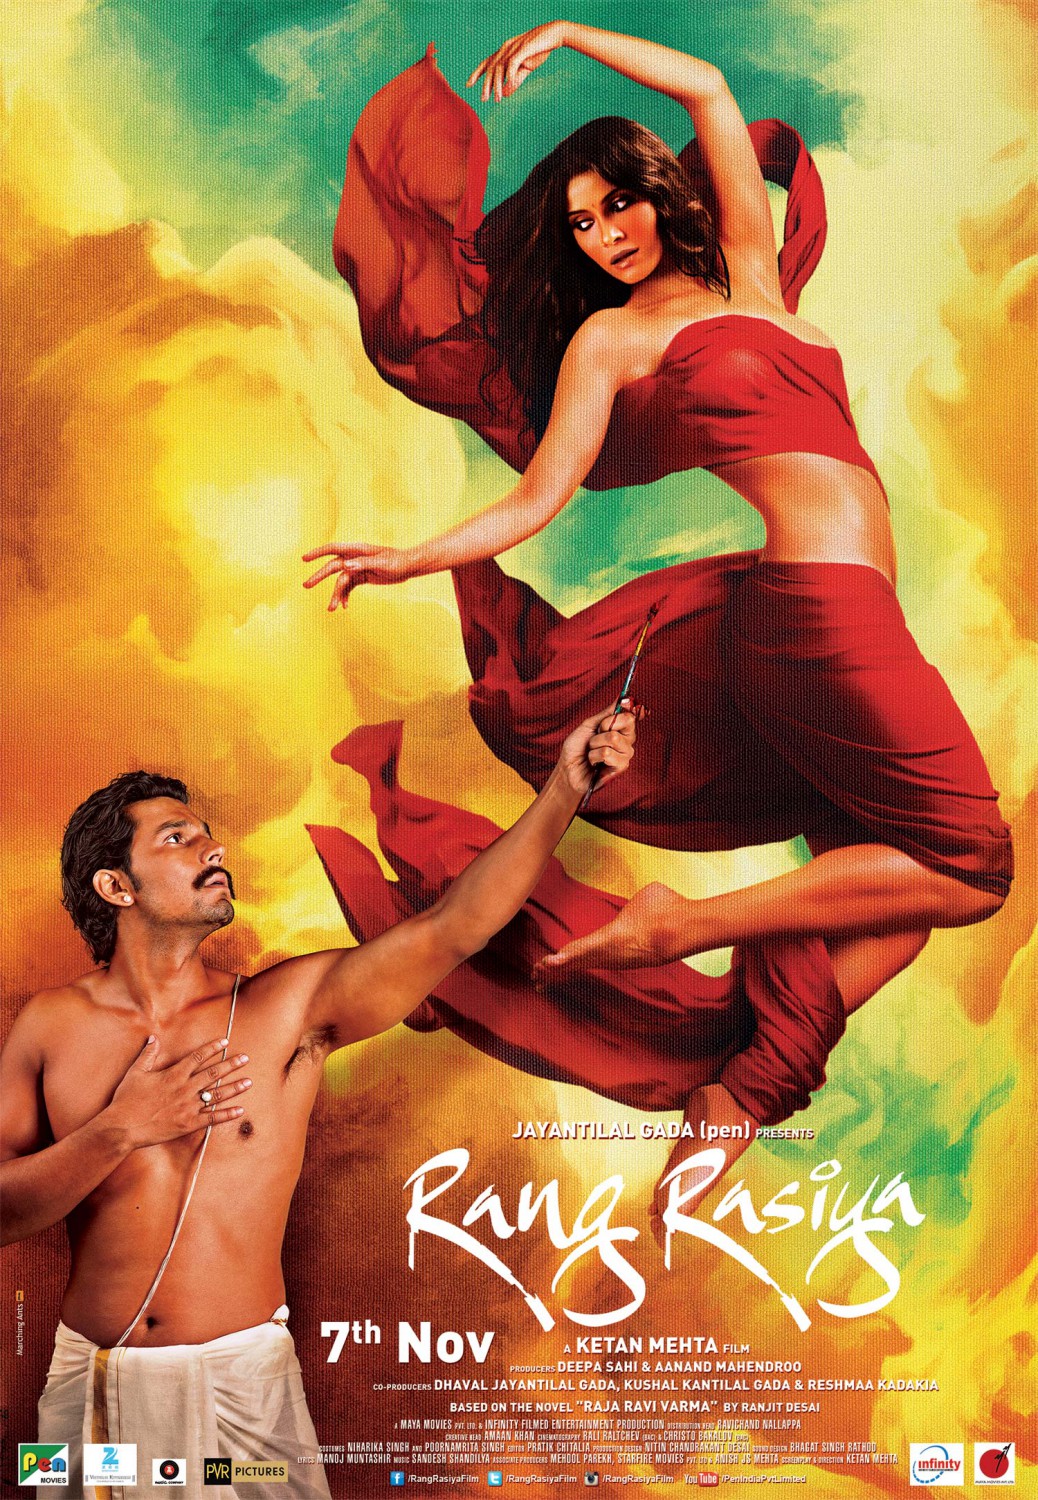 Extra Large Movie Poster Image for Rang rasiya (#9 of 9)